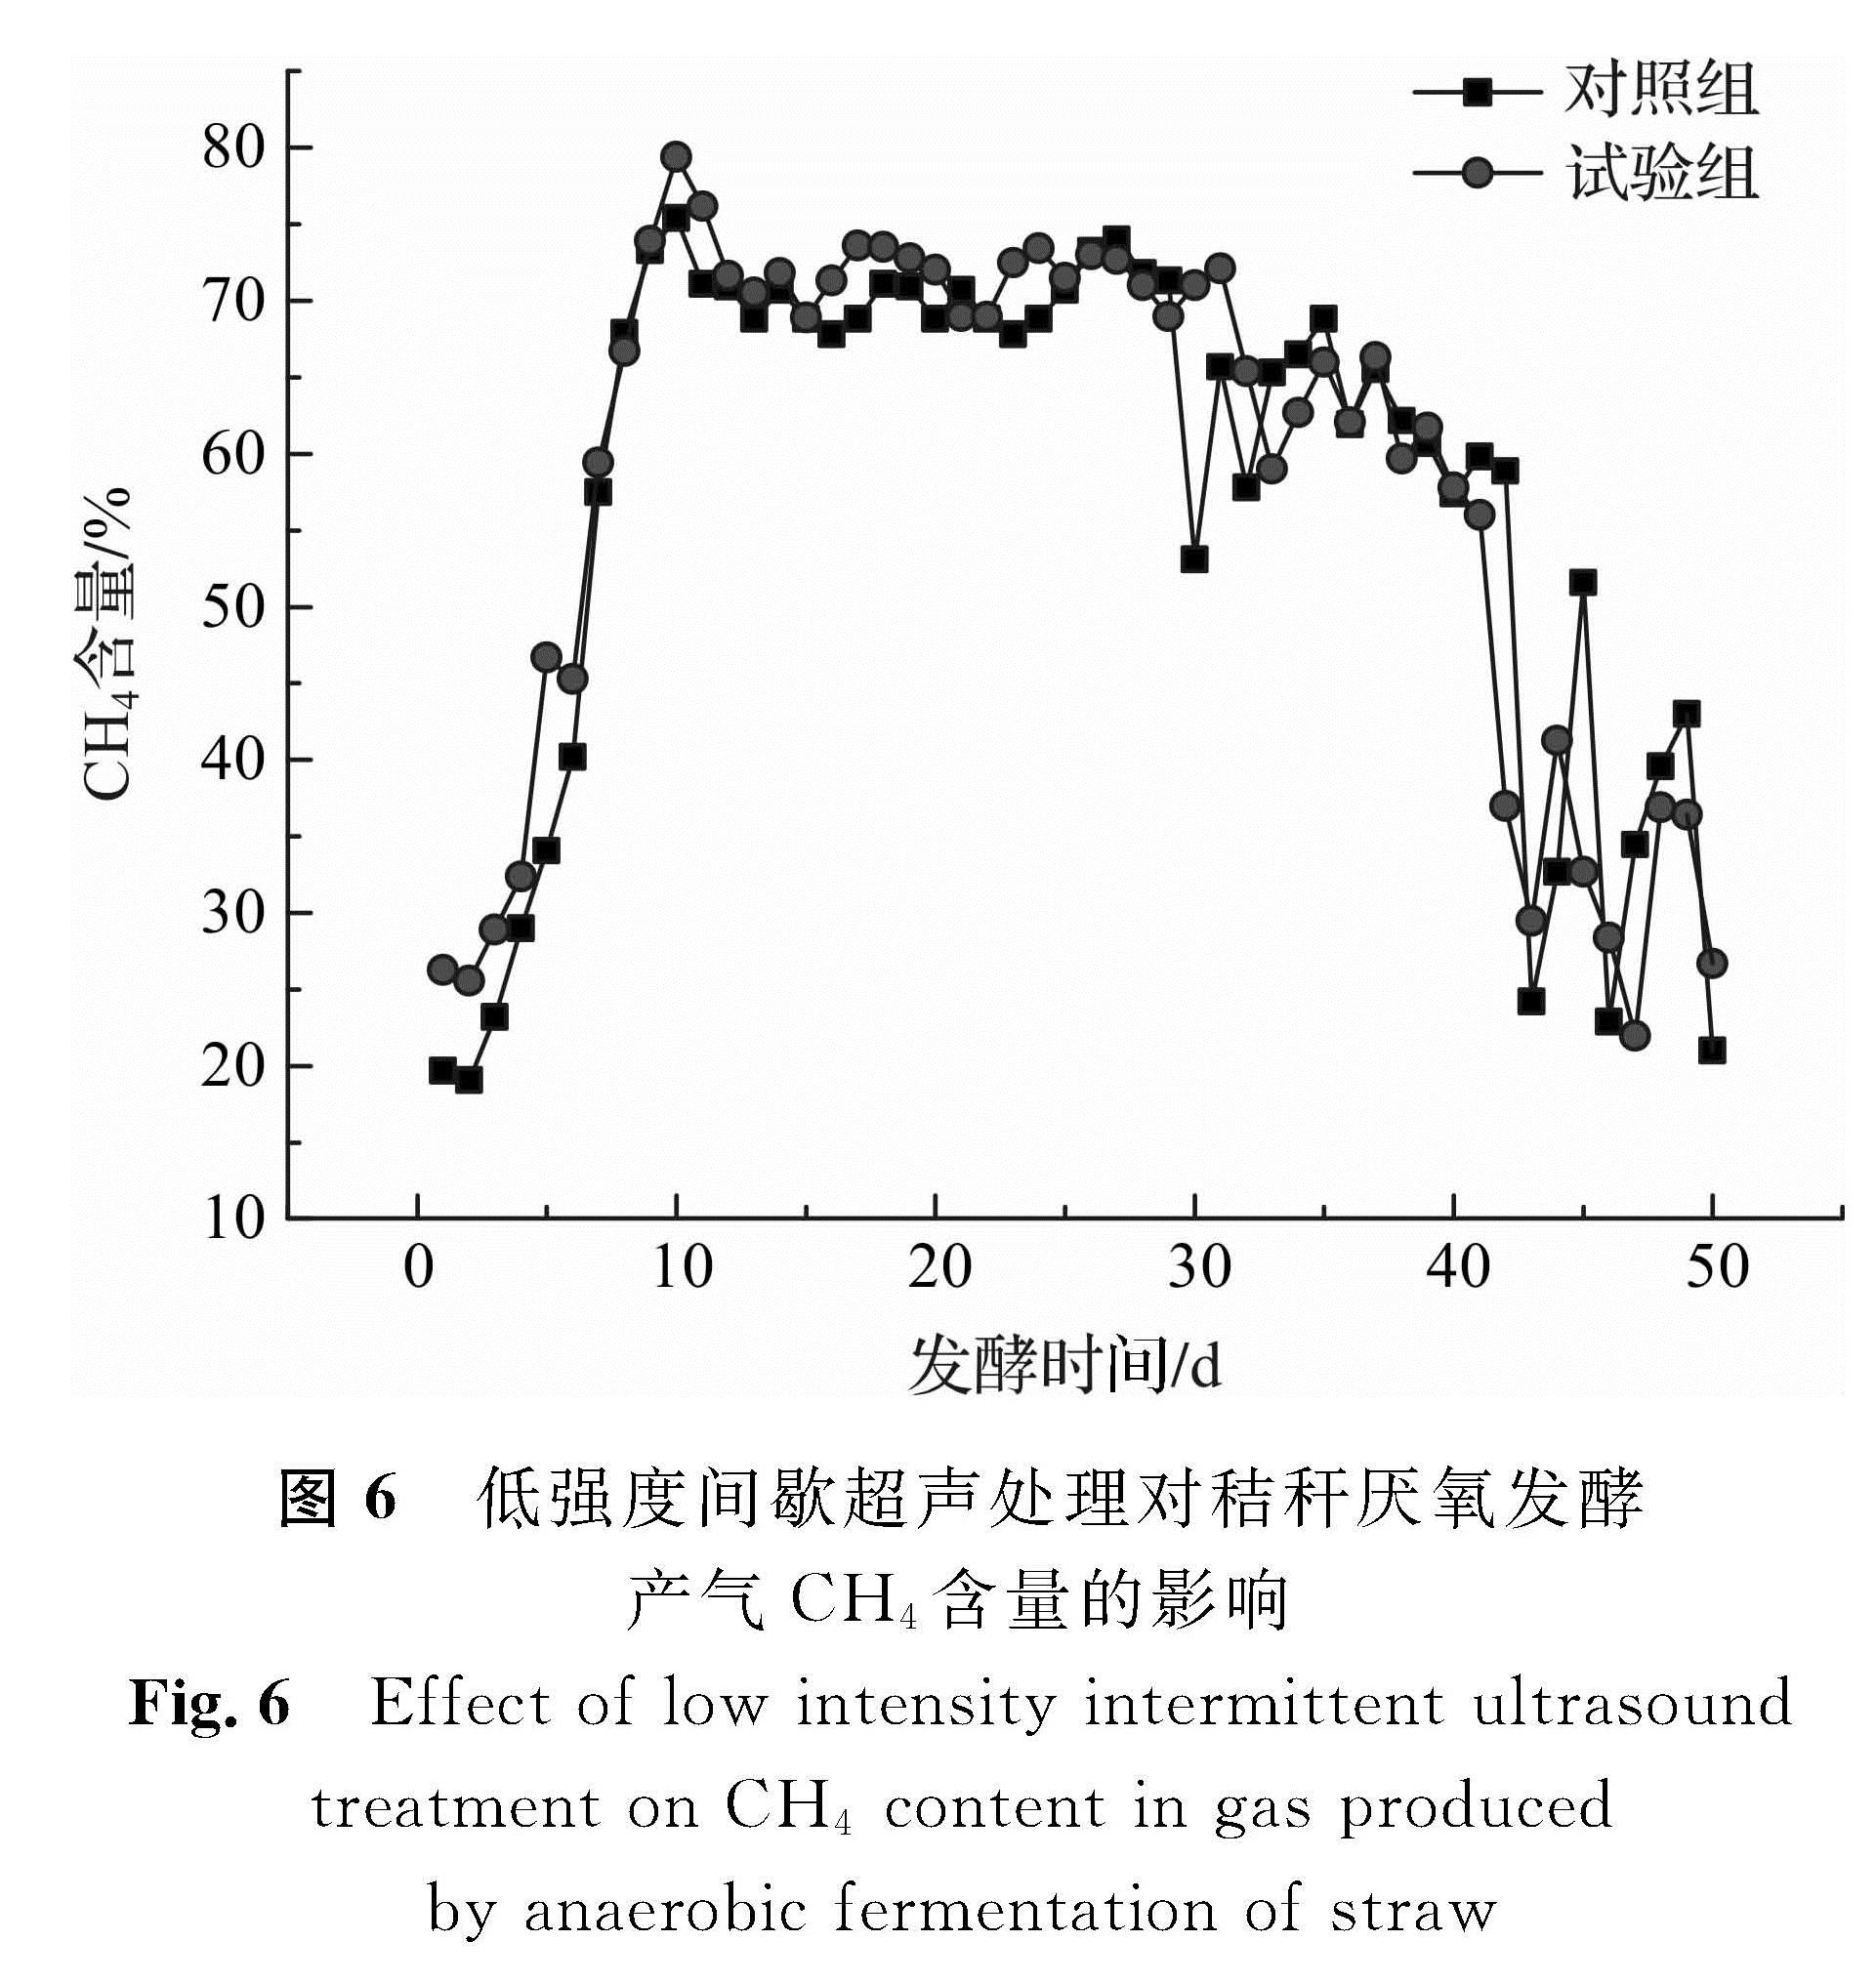 图6 低强度间歇超声处理对秸秆厌氧发酵产气CH4含量的影响<br/>Fig.6 Effect of low intensity intermittent ultrasound treatment on CH4 content in gas produced by anaerobic fermentation of straw